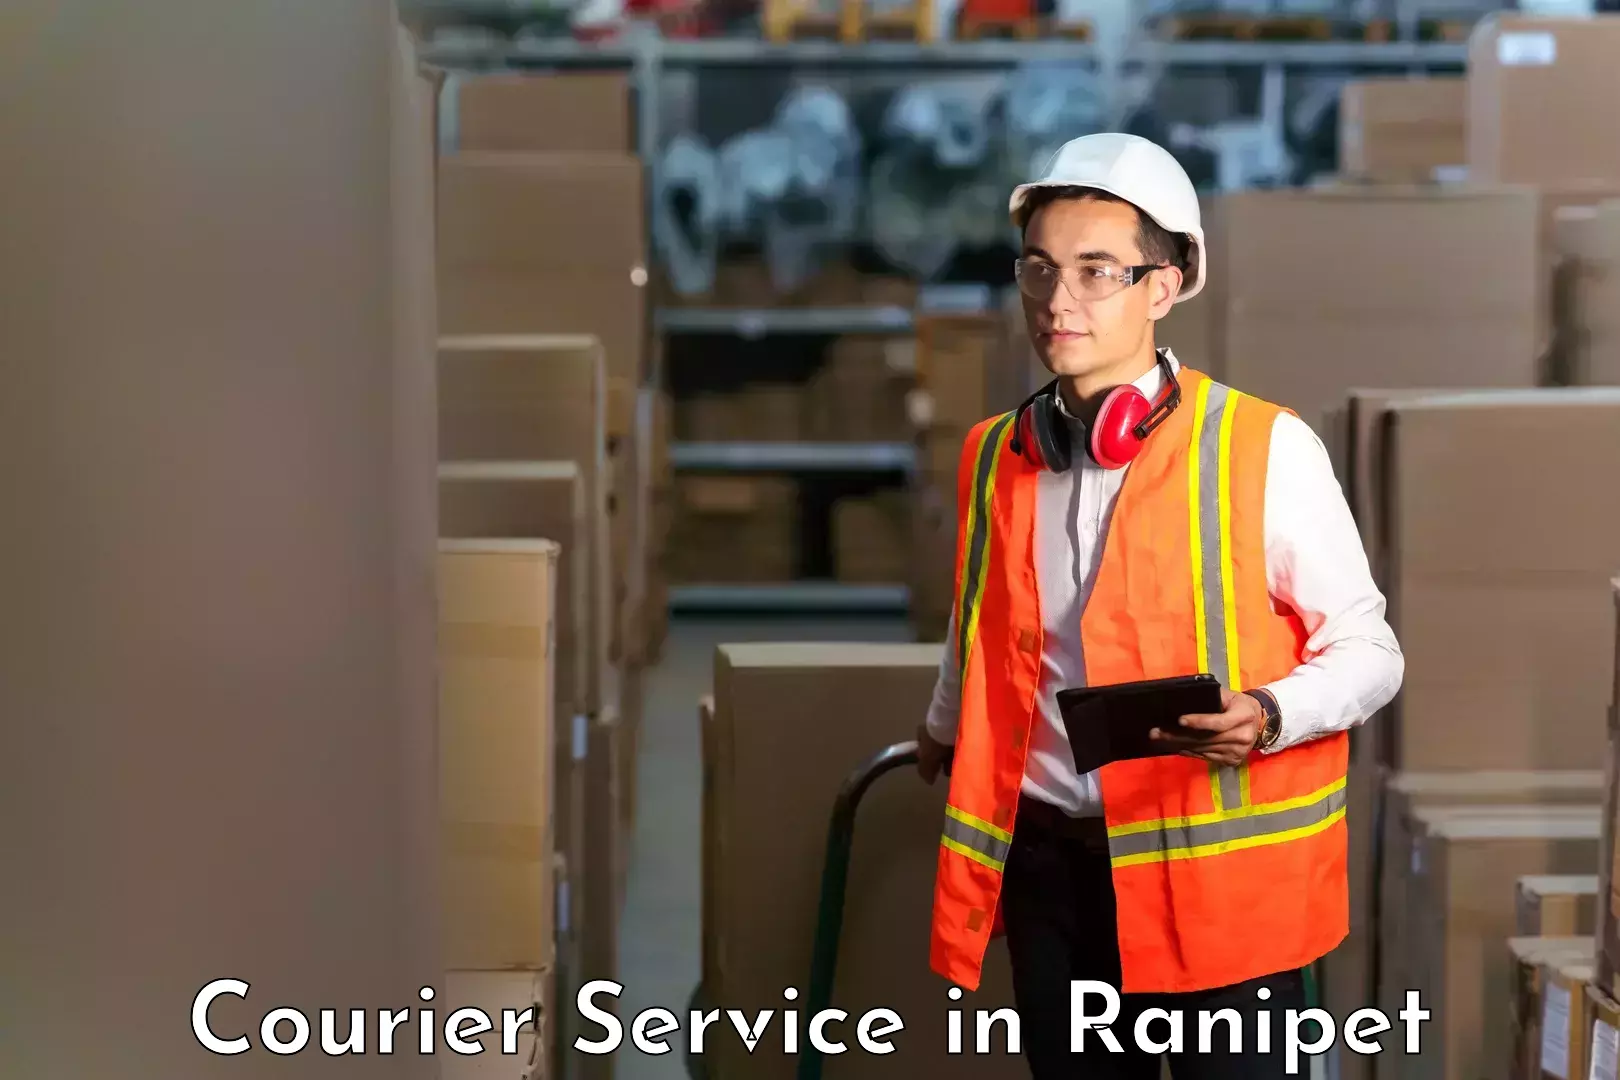 Efficient order fulfillment in Ranipet